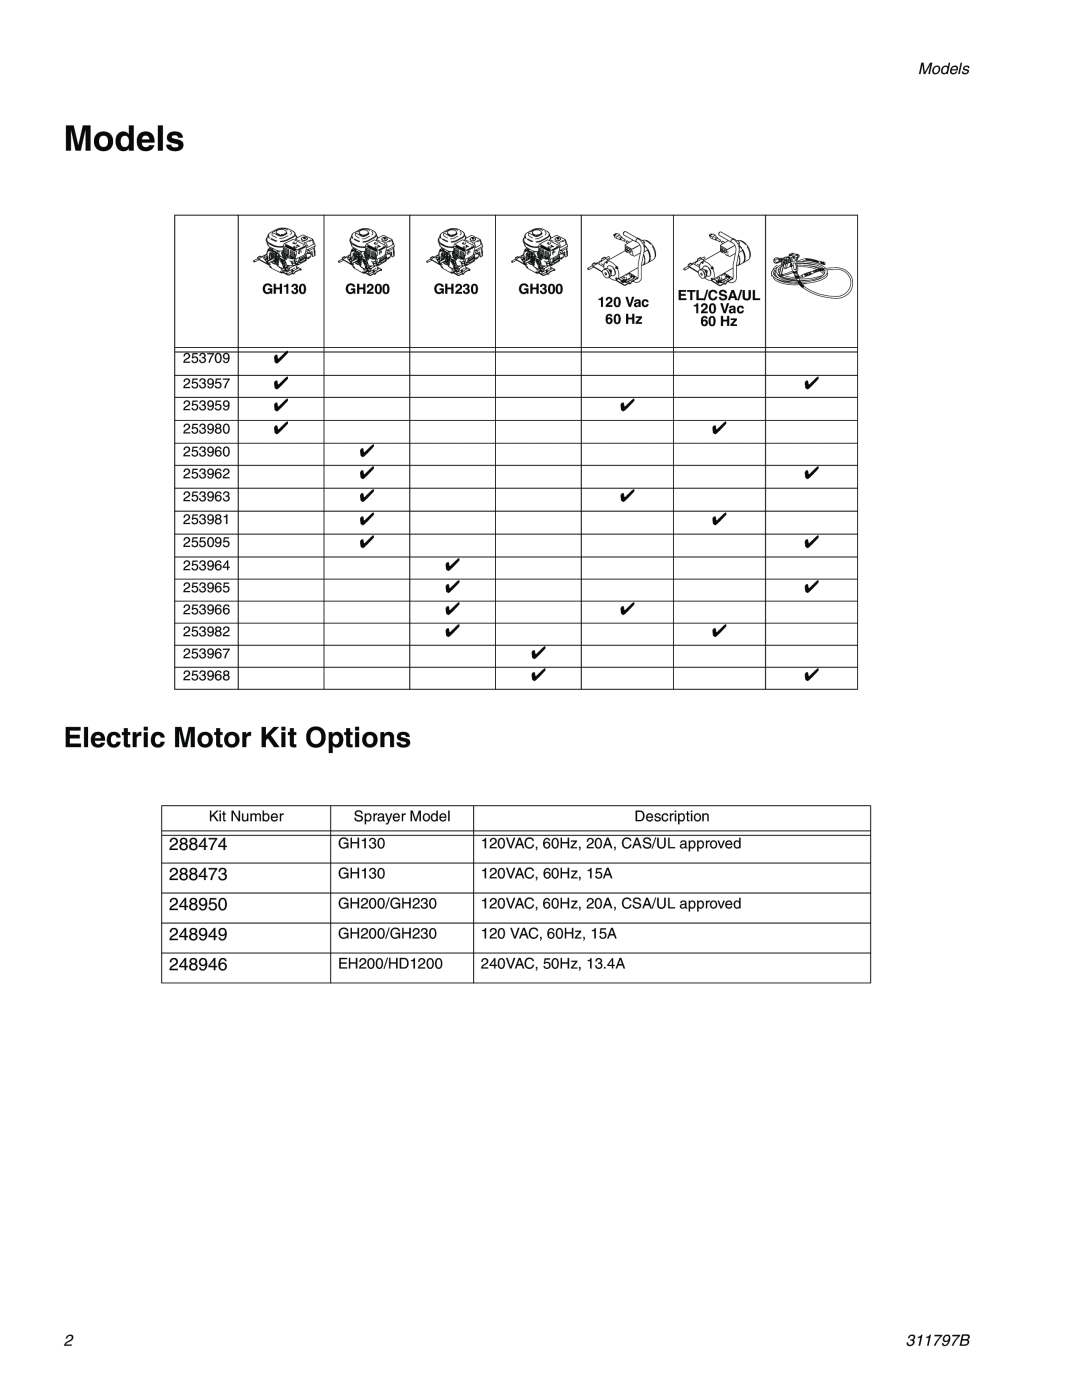 Uniden GH 130, GH 230 Models, Electric Motor Kit Options, GH130, GH200, GH230, GH300, 120 Vac, Etl/Csa/Ul, 60 Hz, 311797B 